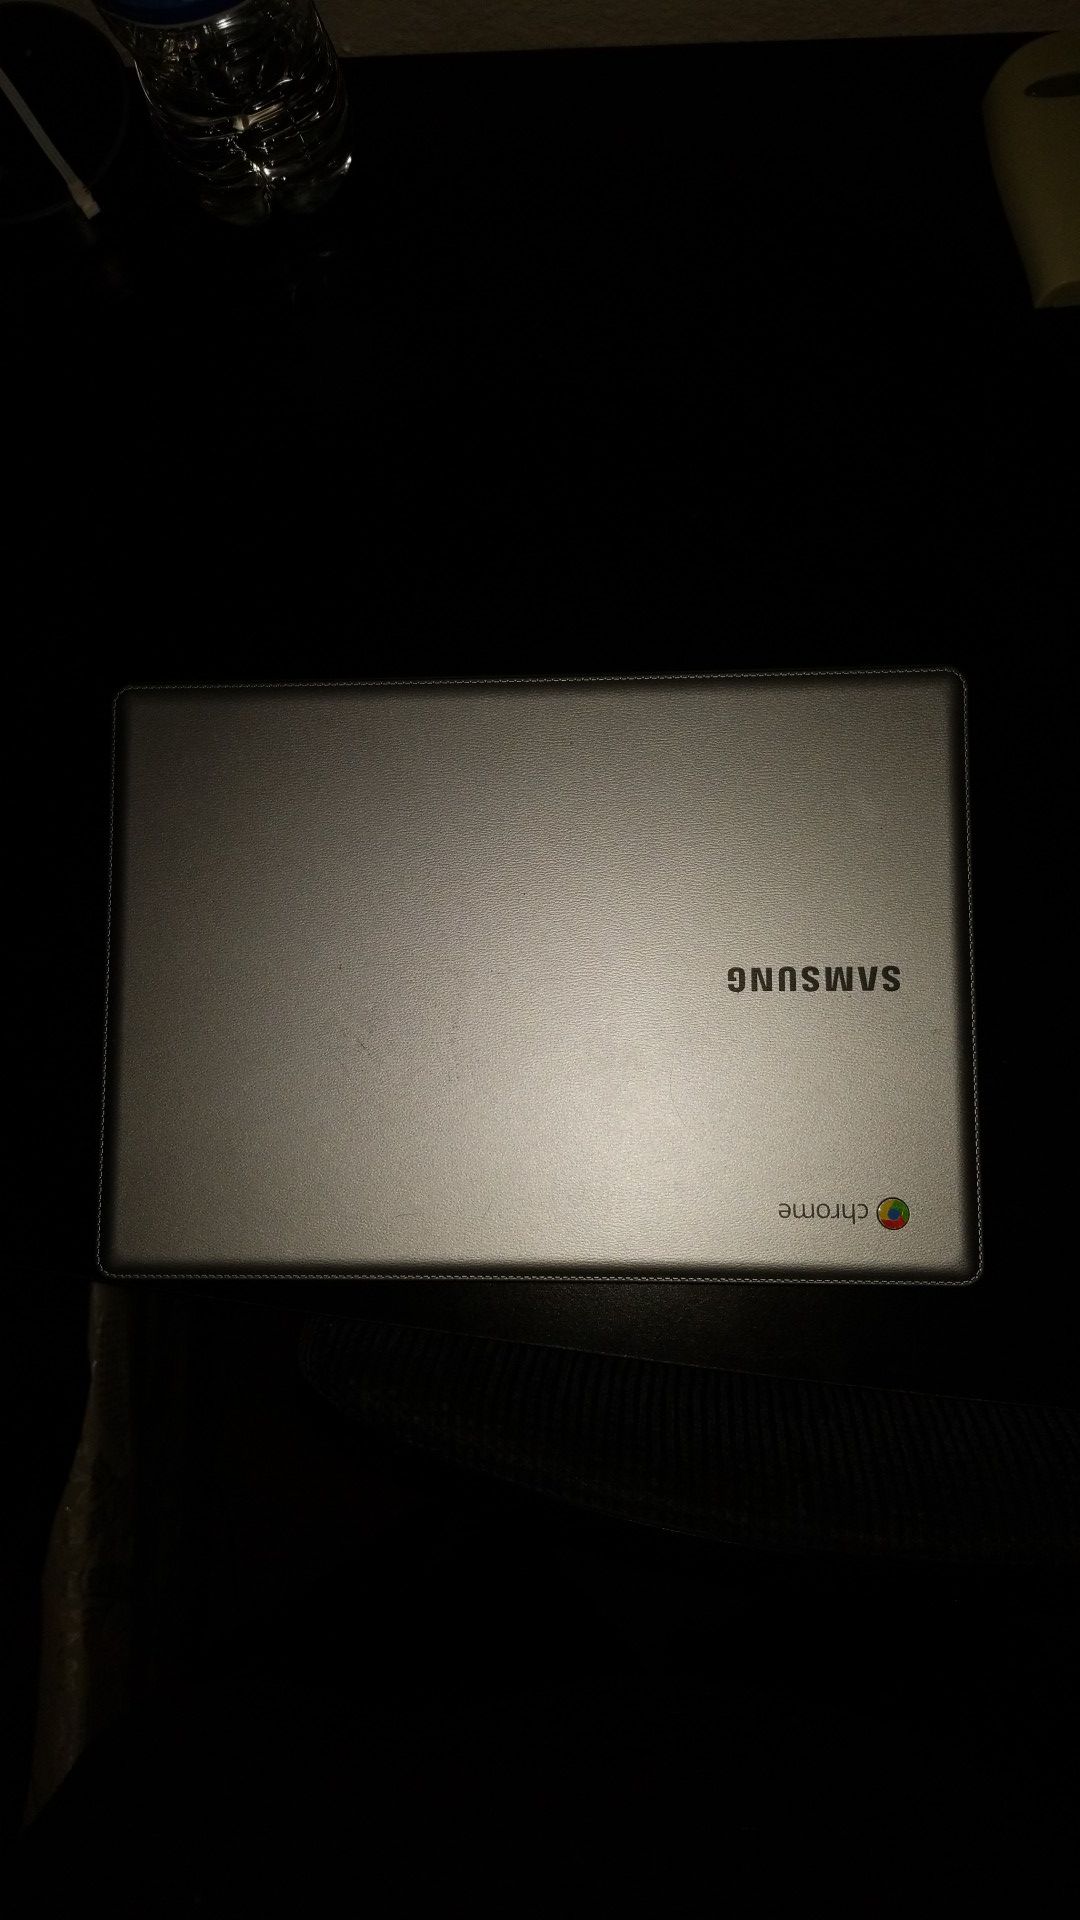 Samsung Chromebook laptop